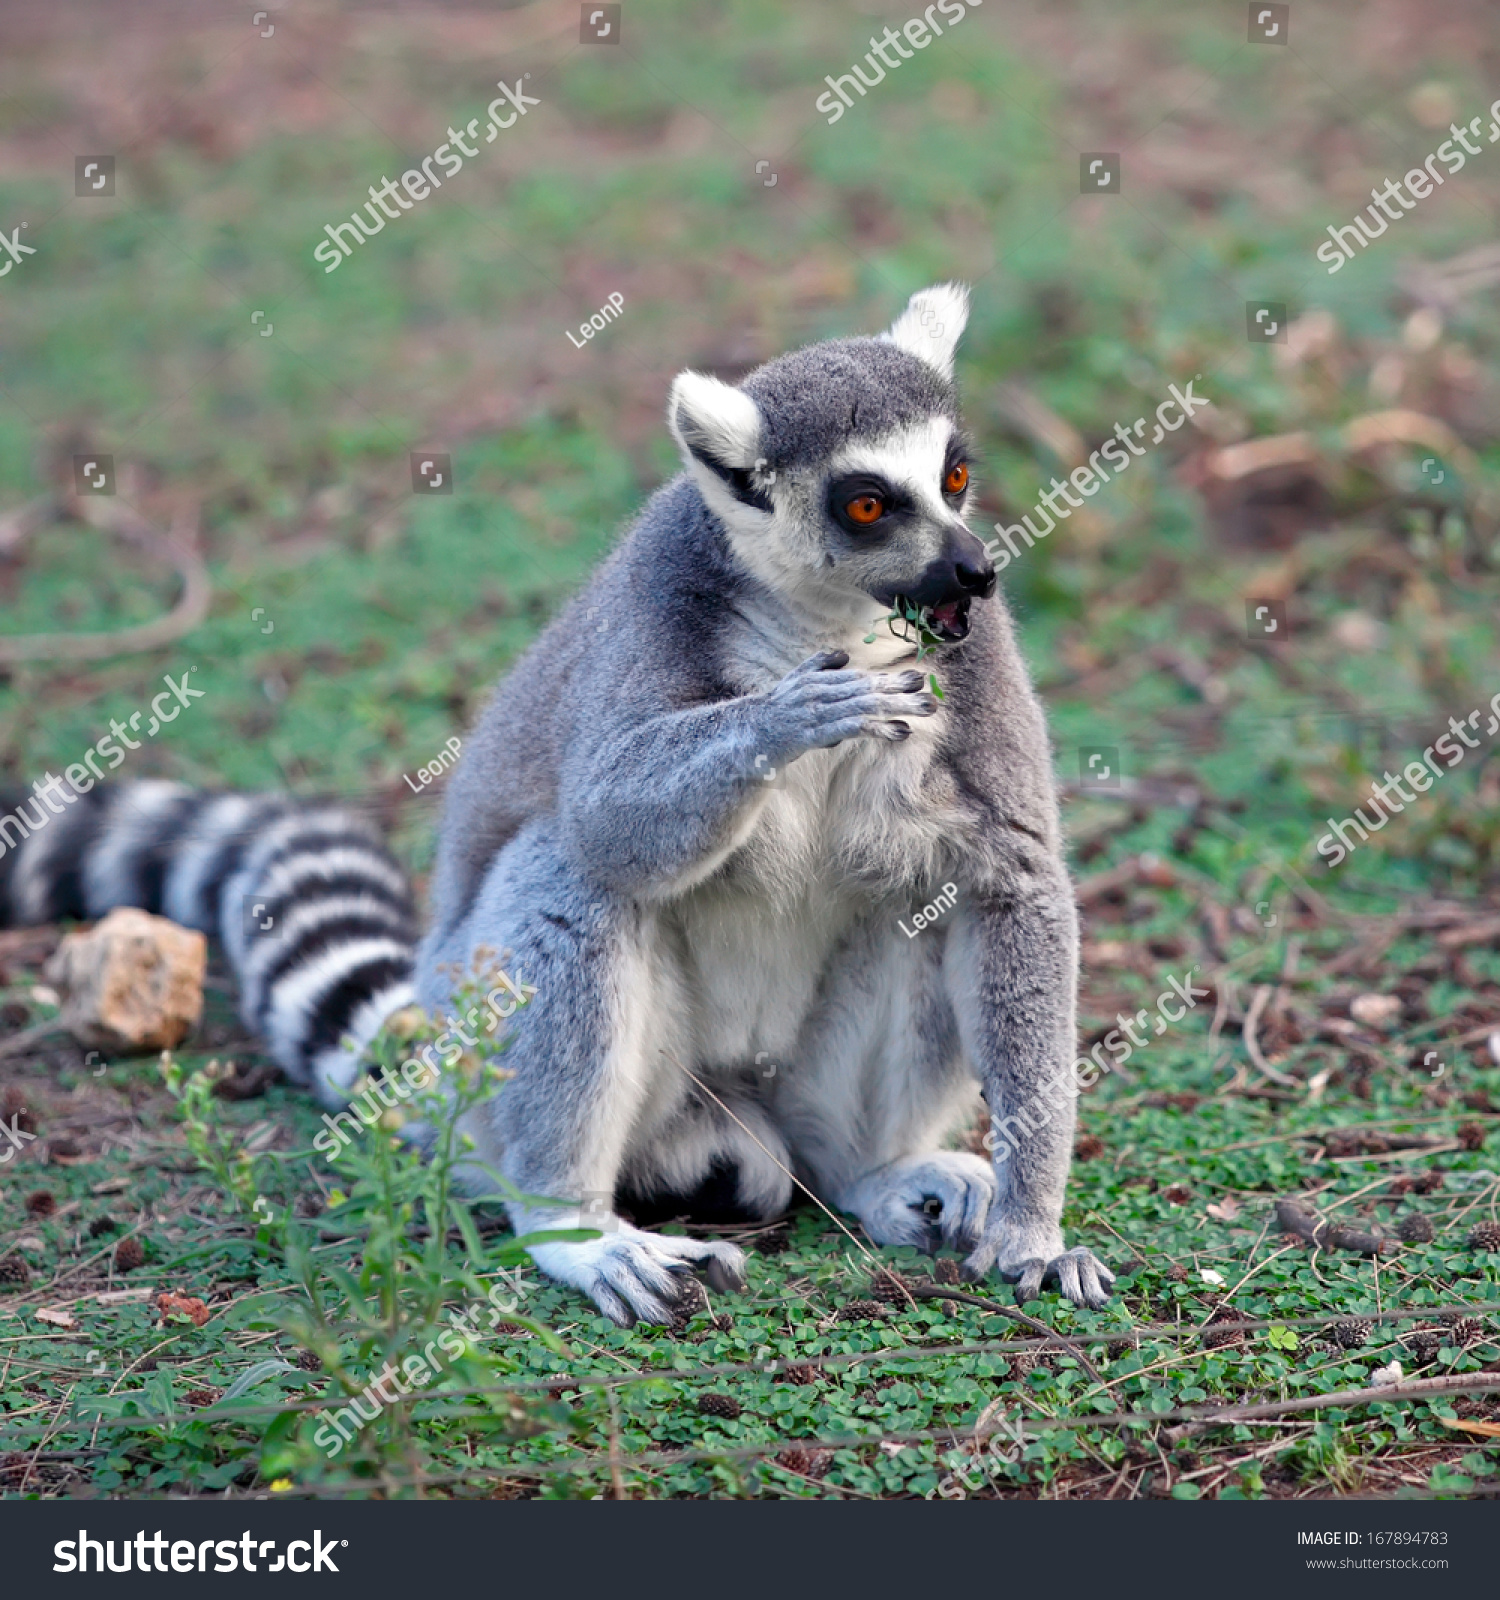 Lemur pose photo